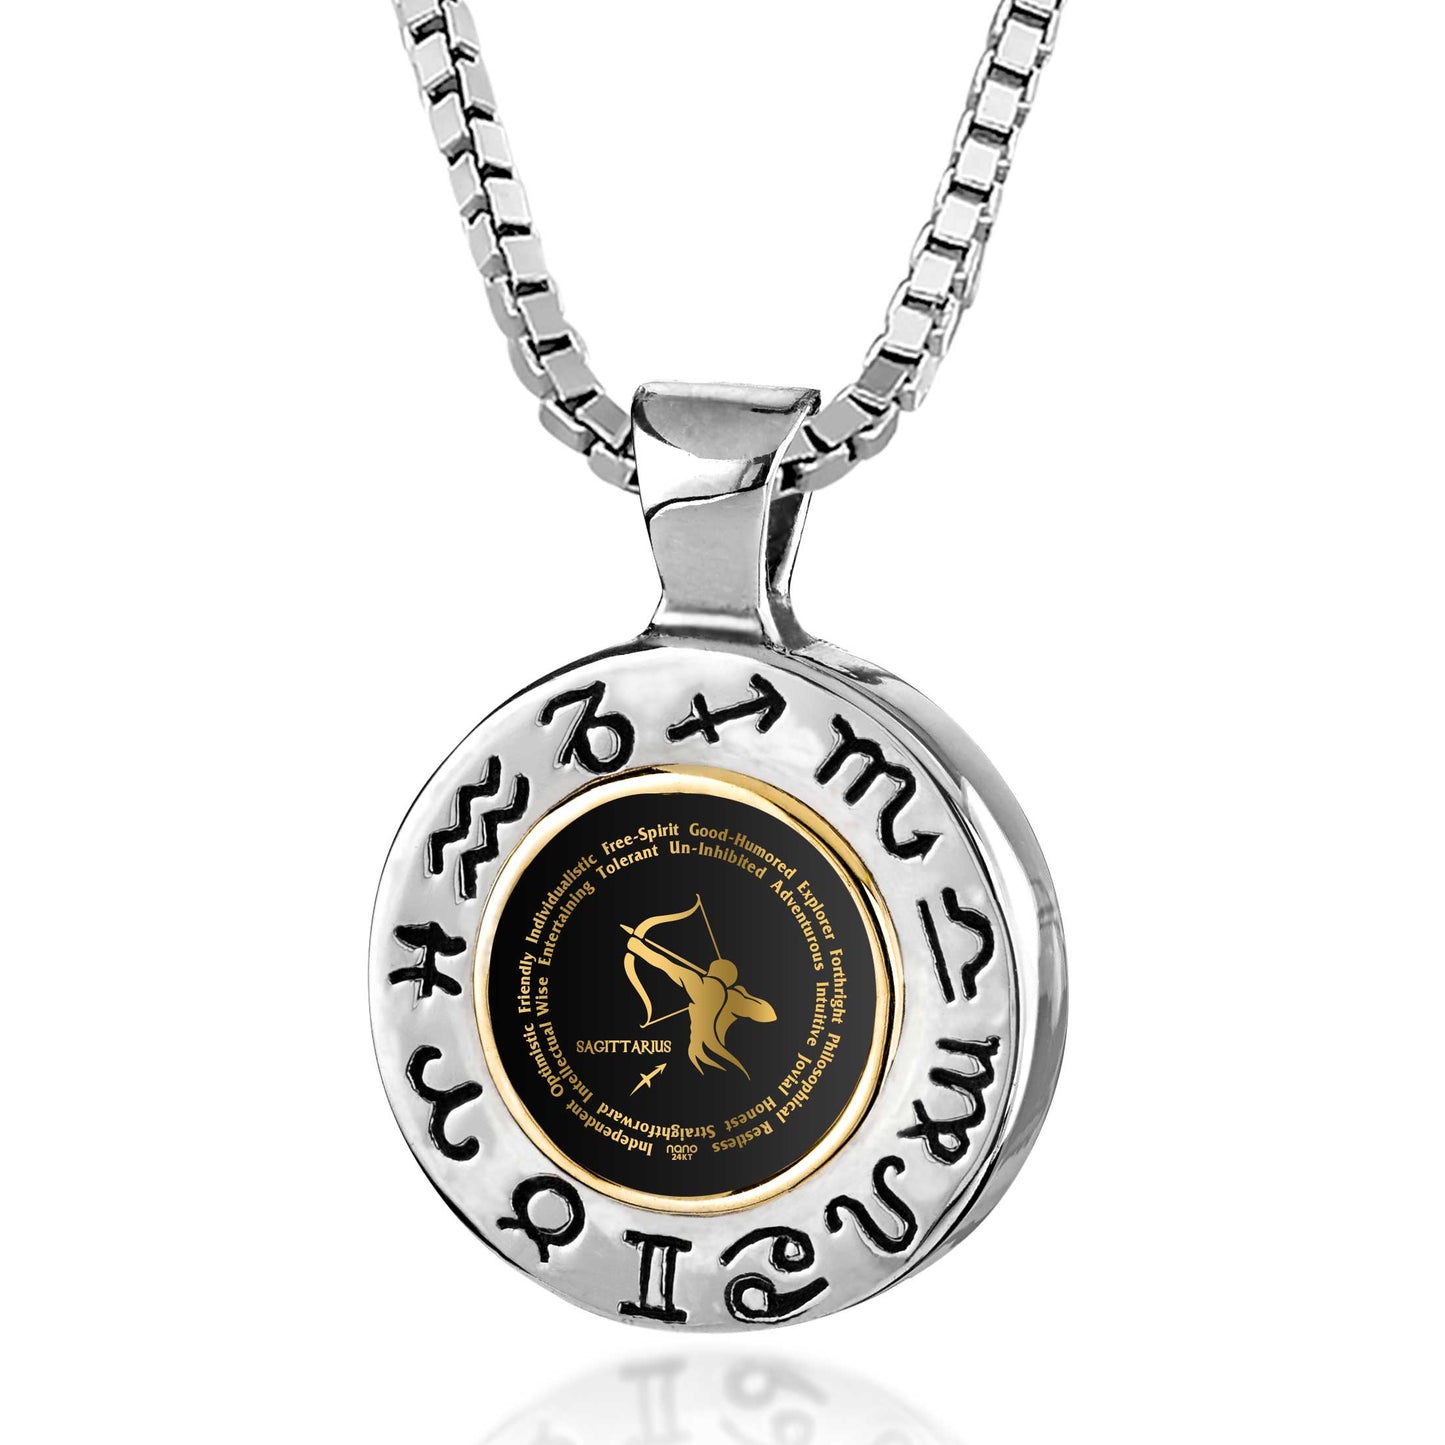 Sagittarius Gift for Women or Men | Silver Zodiac Sign Necklace*